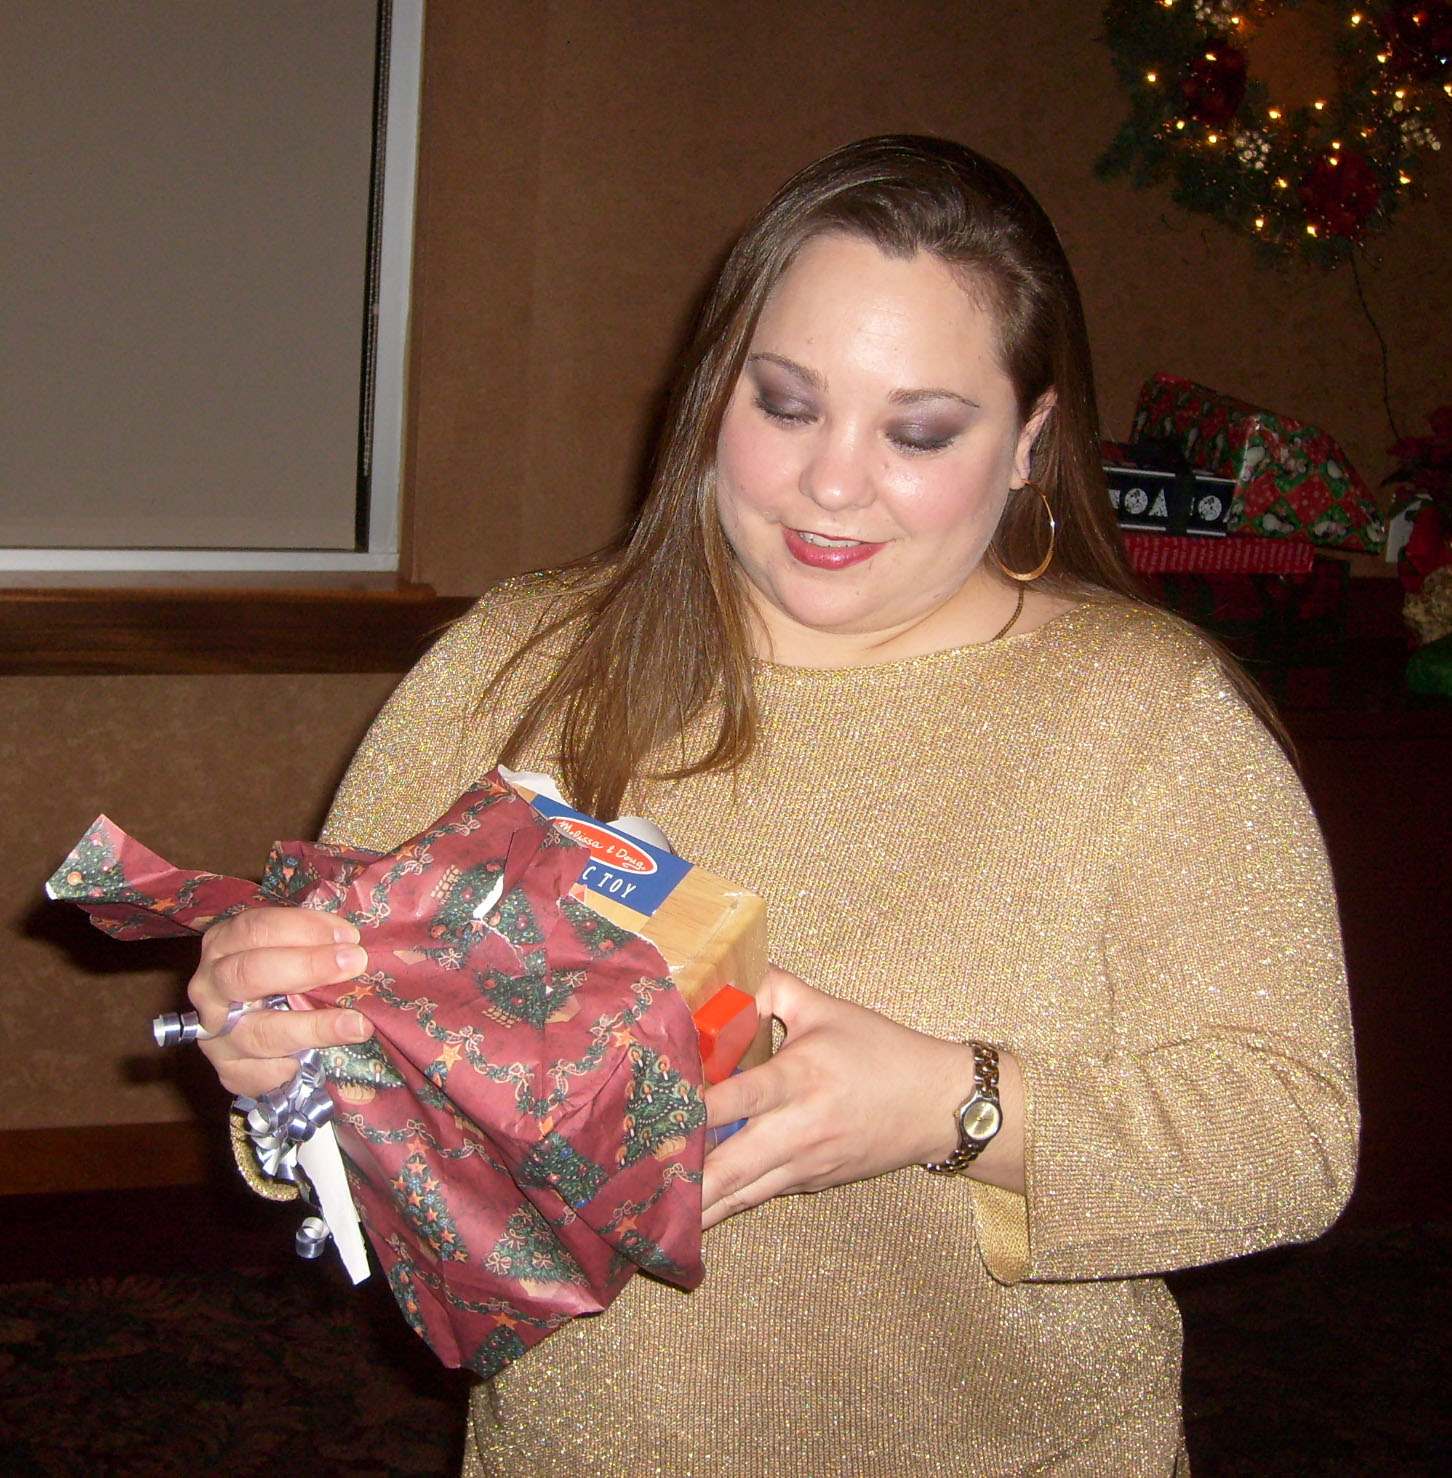 Diana Almaraz opening her gift